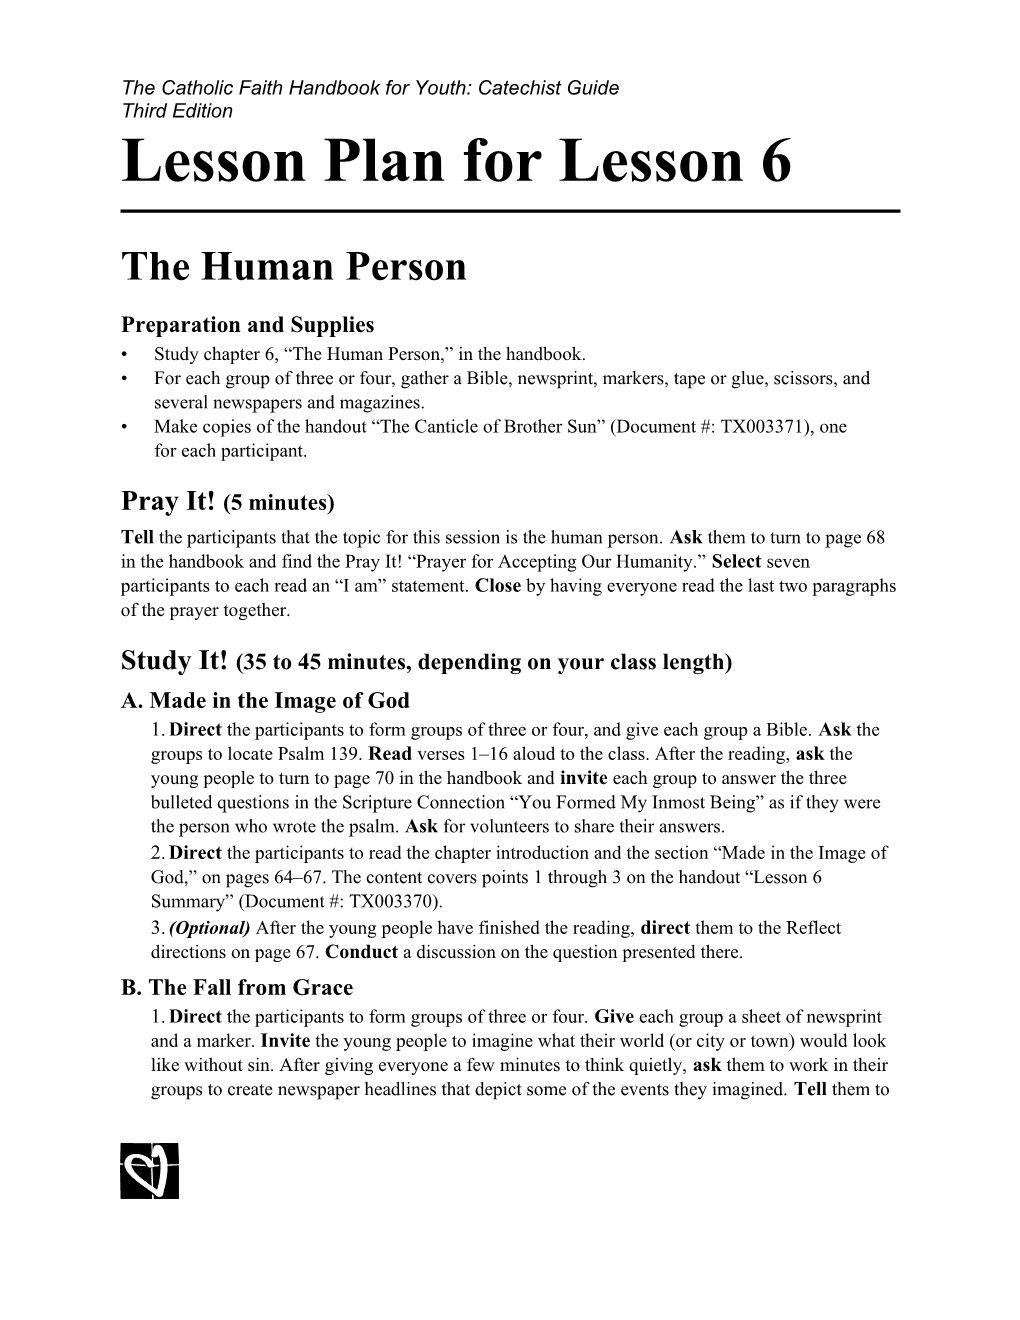 Lesson Plan for Lesson 6